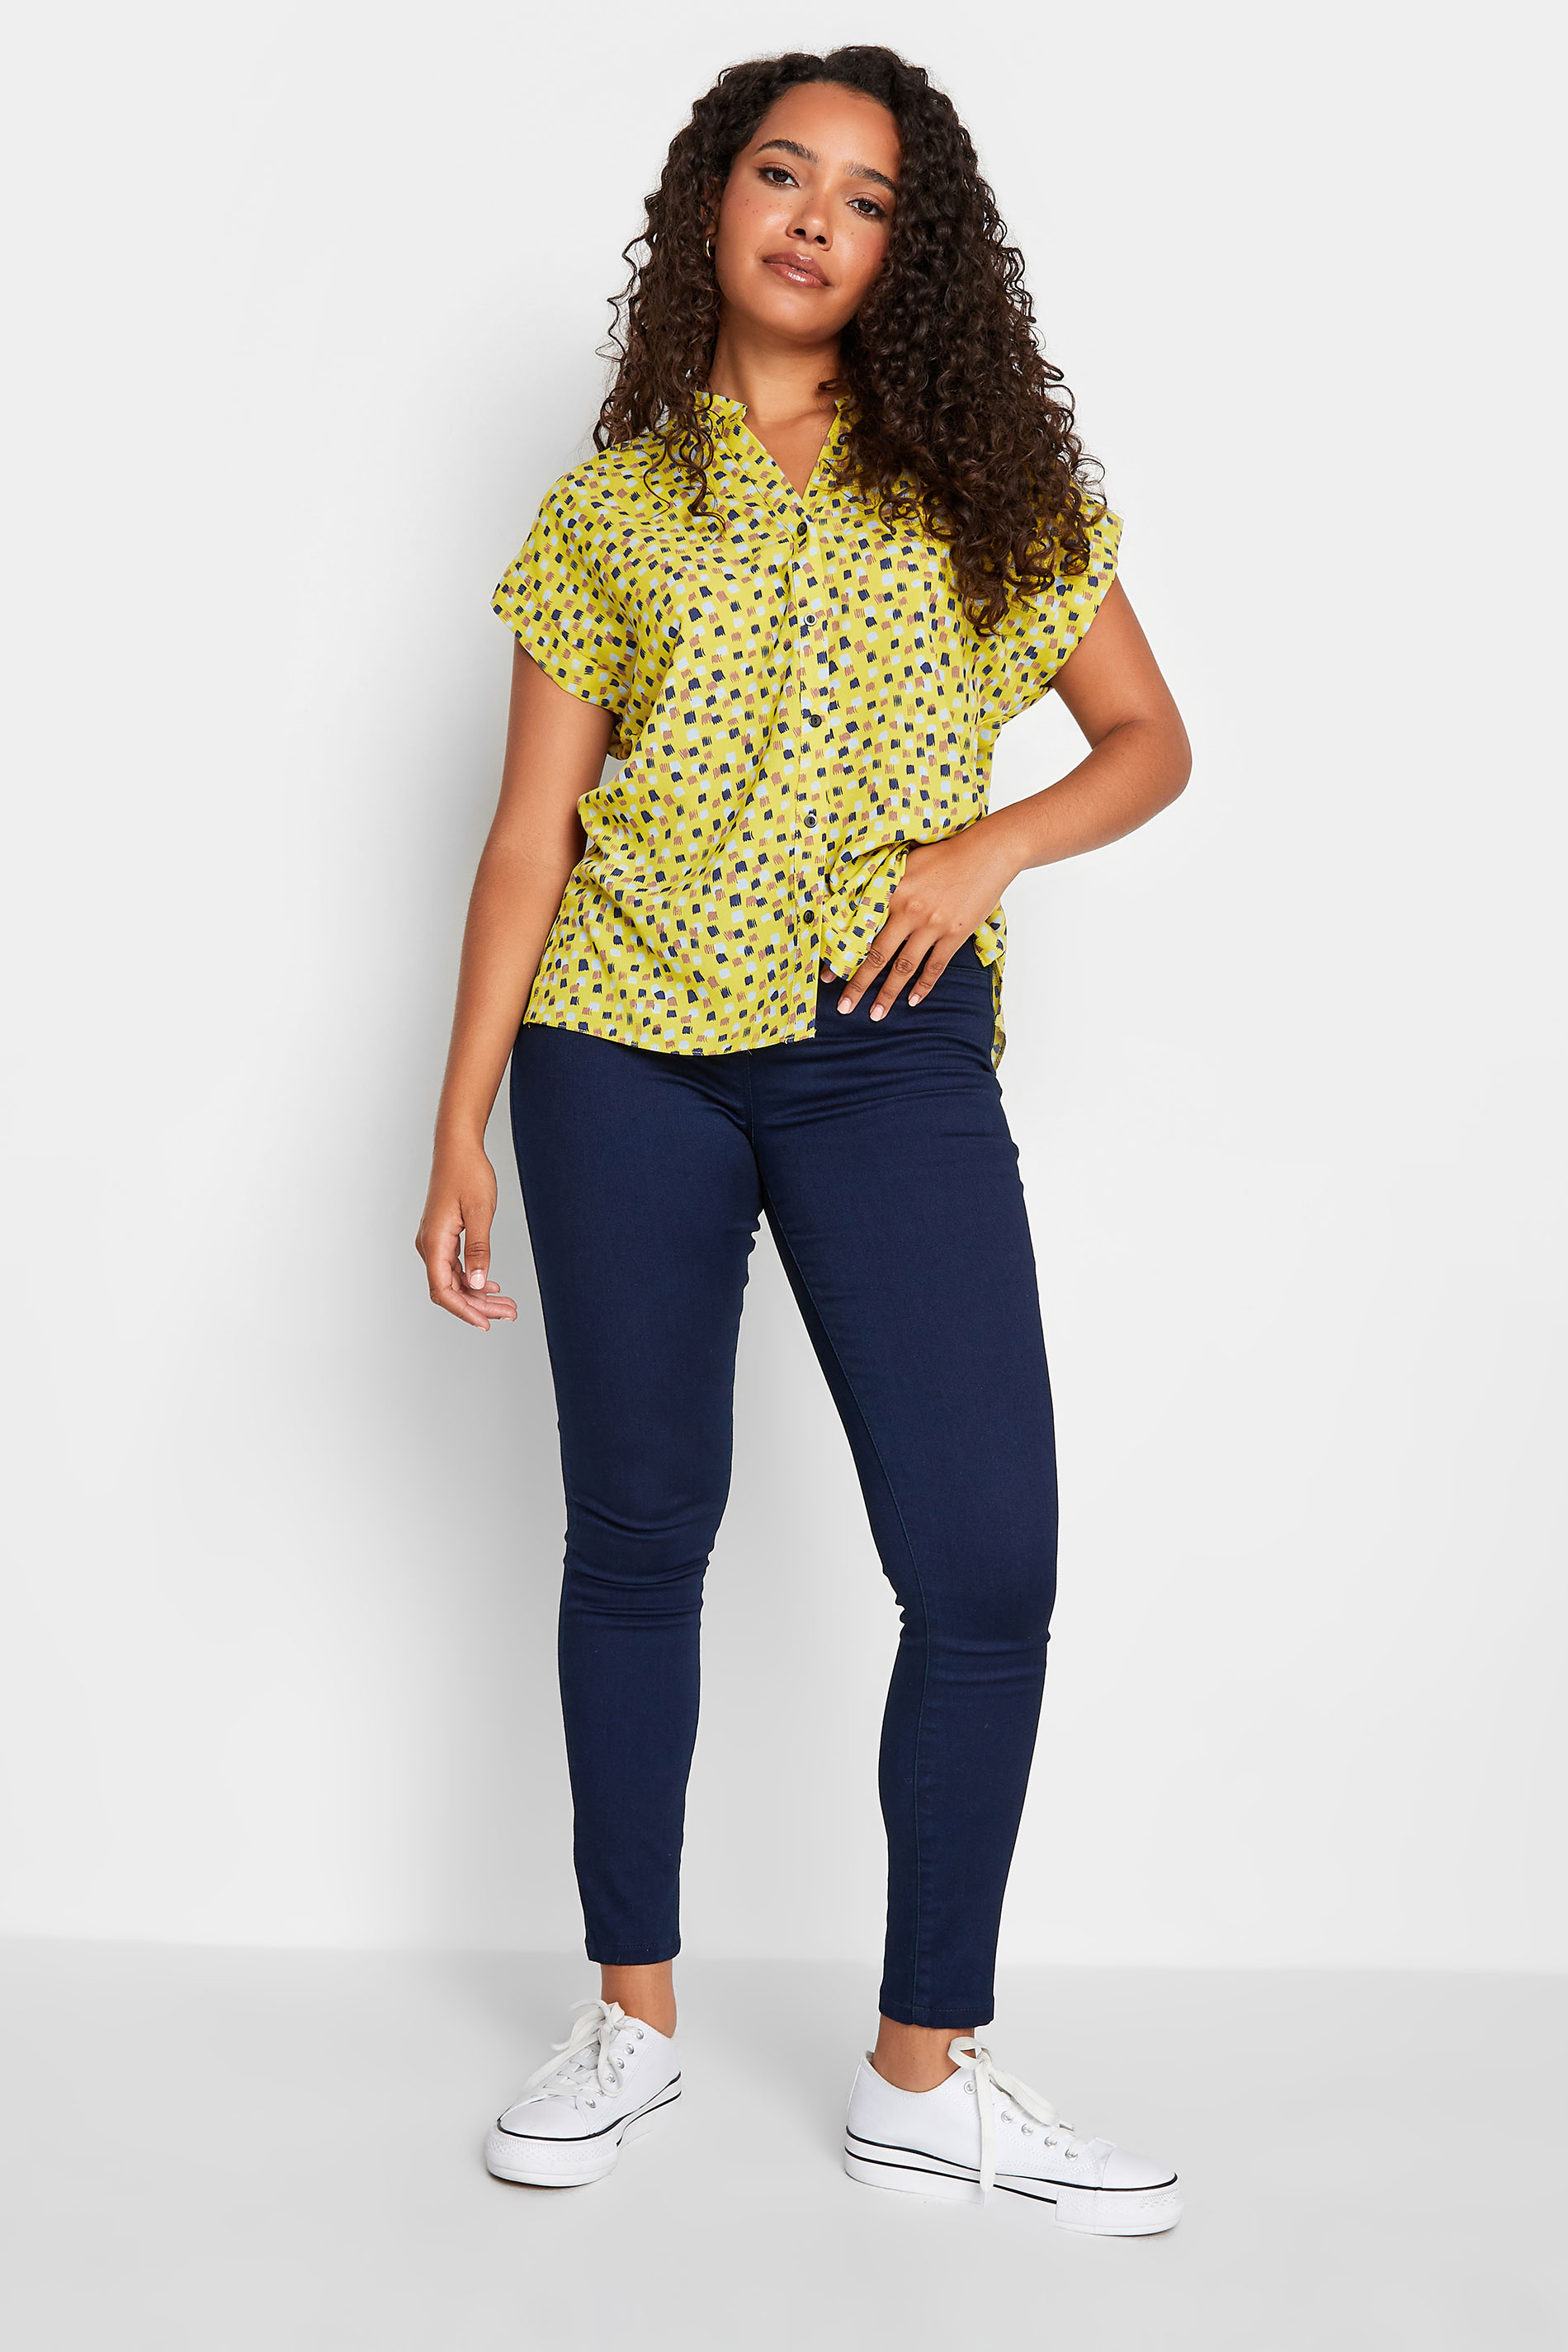 M&Co Yellow Spot Print V-Neck Shirt| M&Co 2